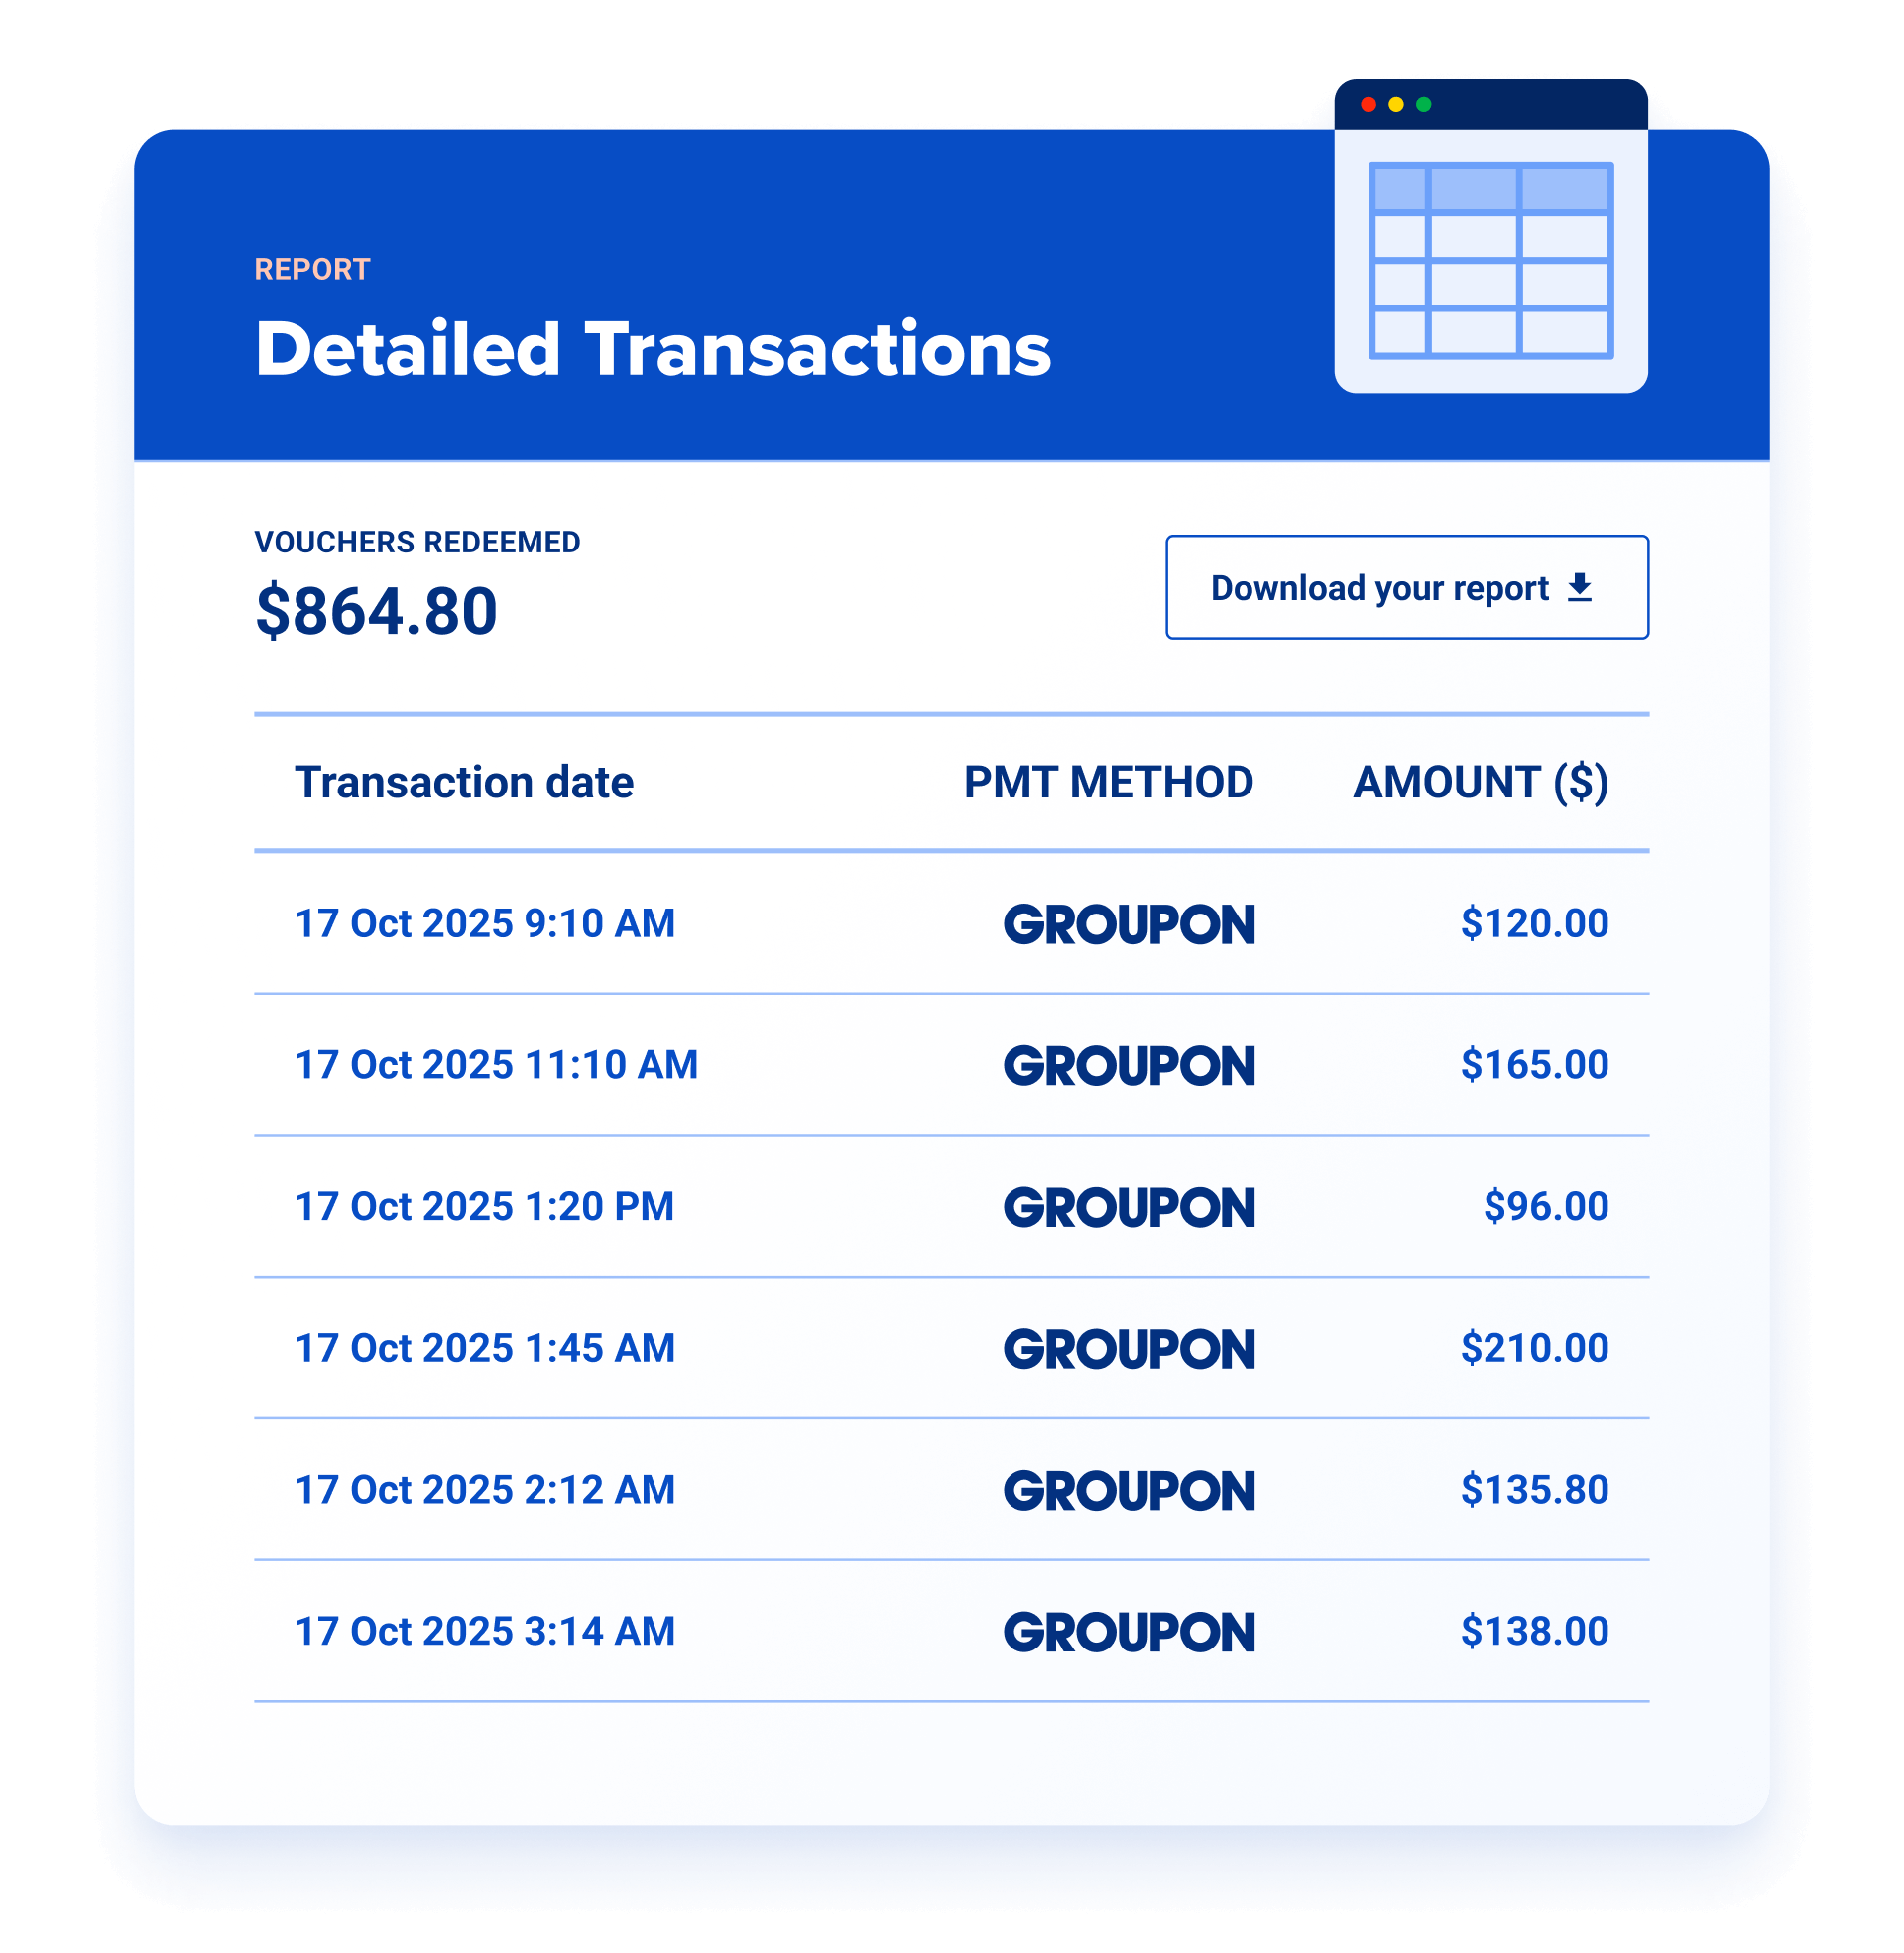 Groupon transaction summary